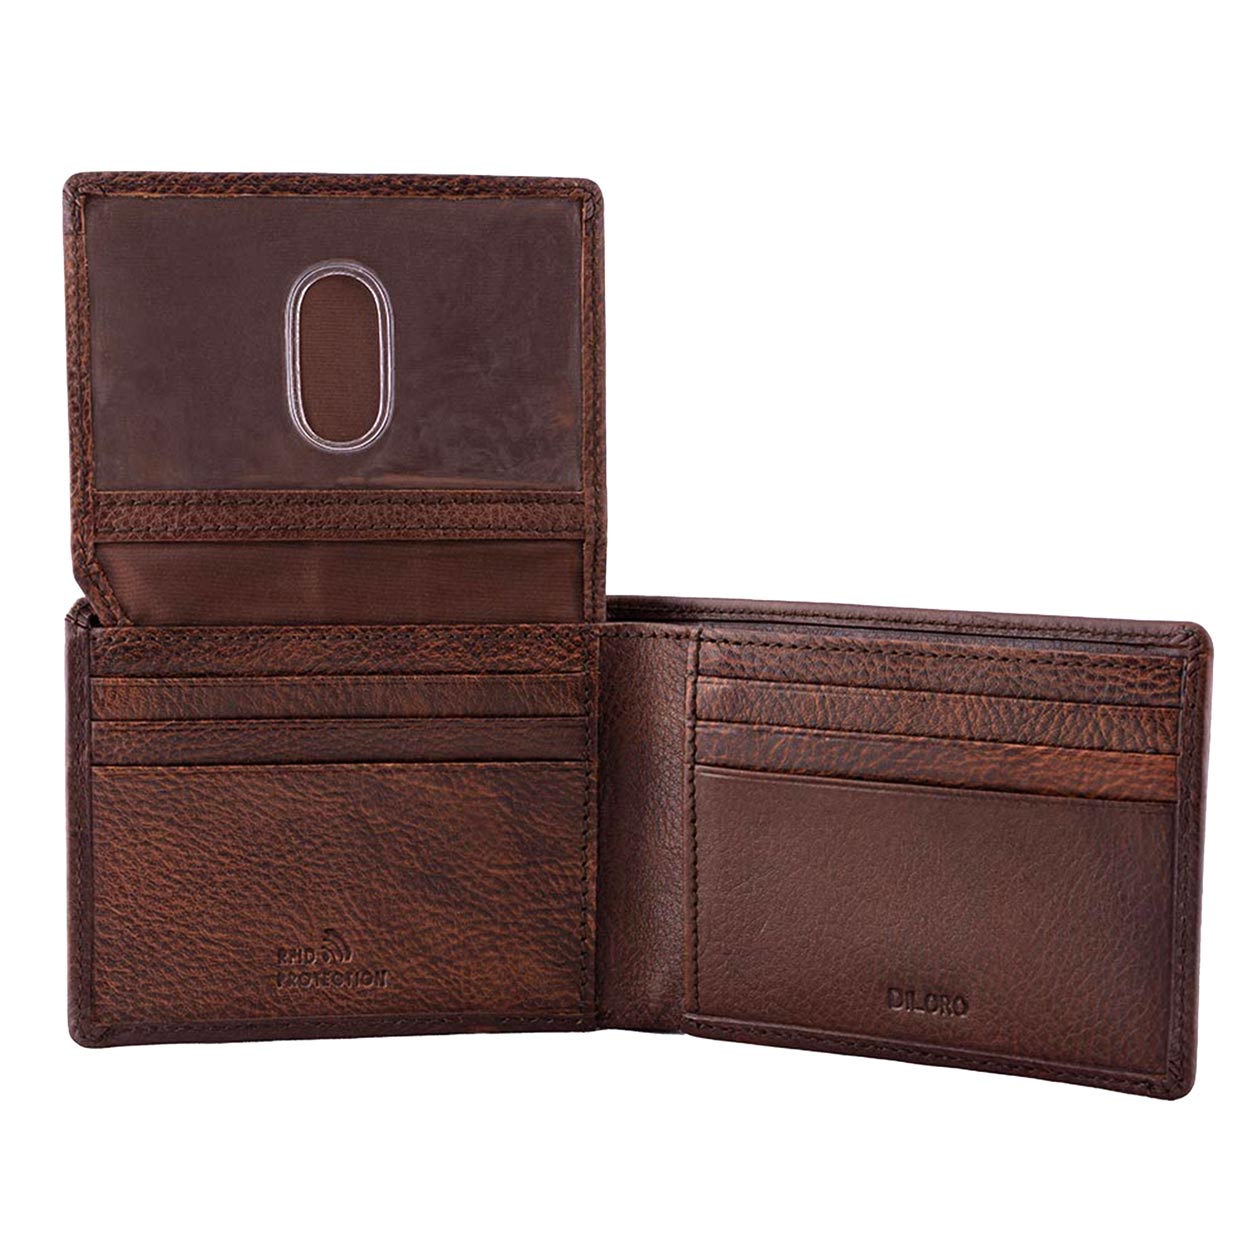 DiLoro Men's Slim Leather Wallet 2 ID Windows Gemini Brown - Open with ID Window Up, Empty Wallet